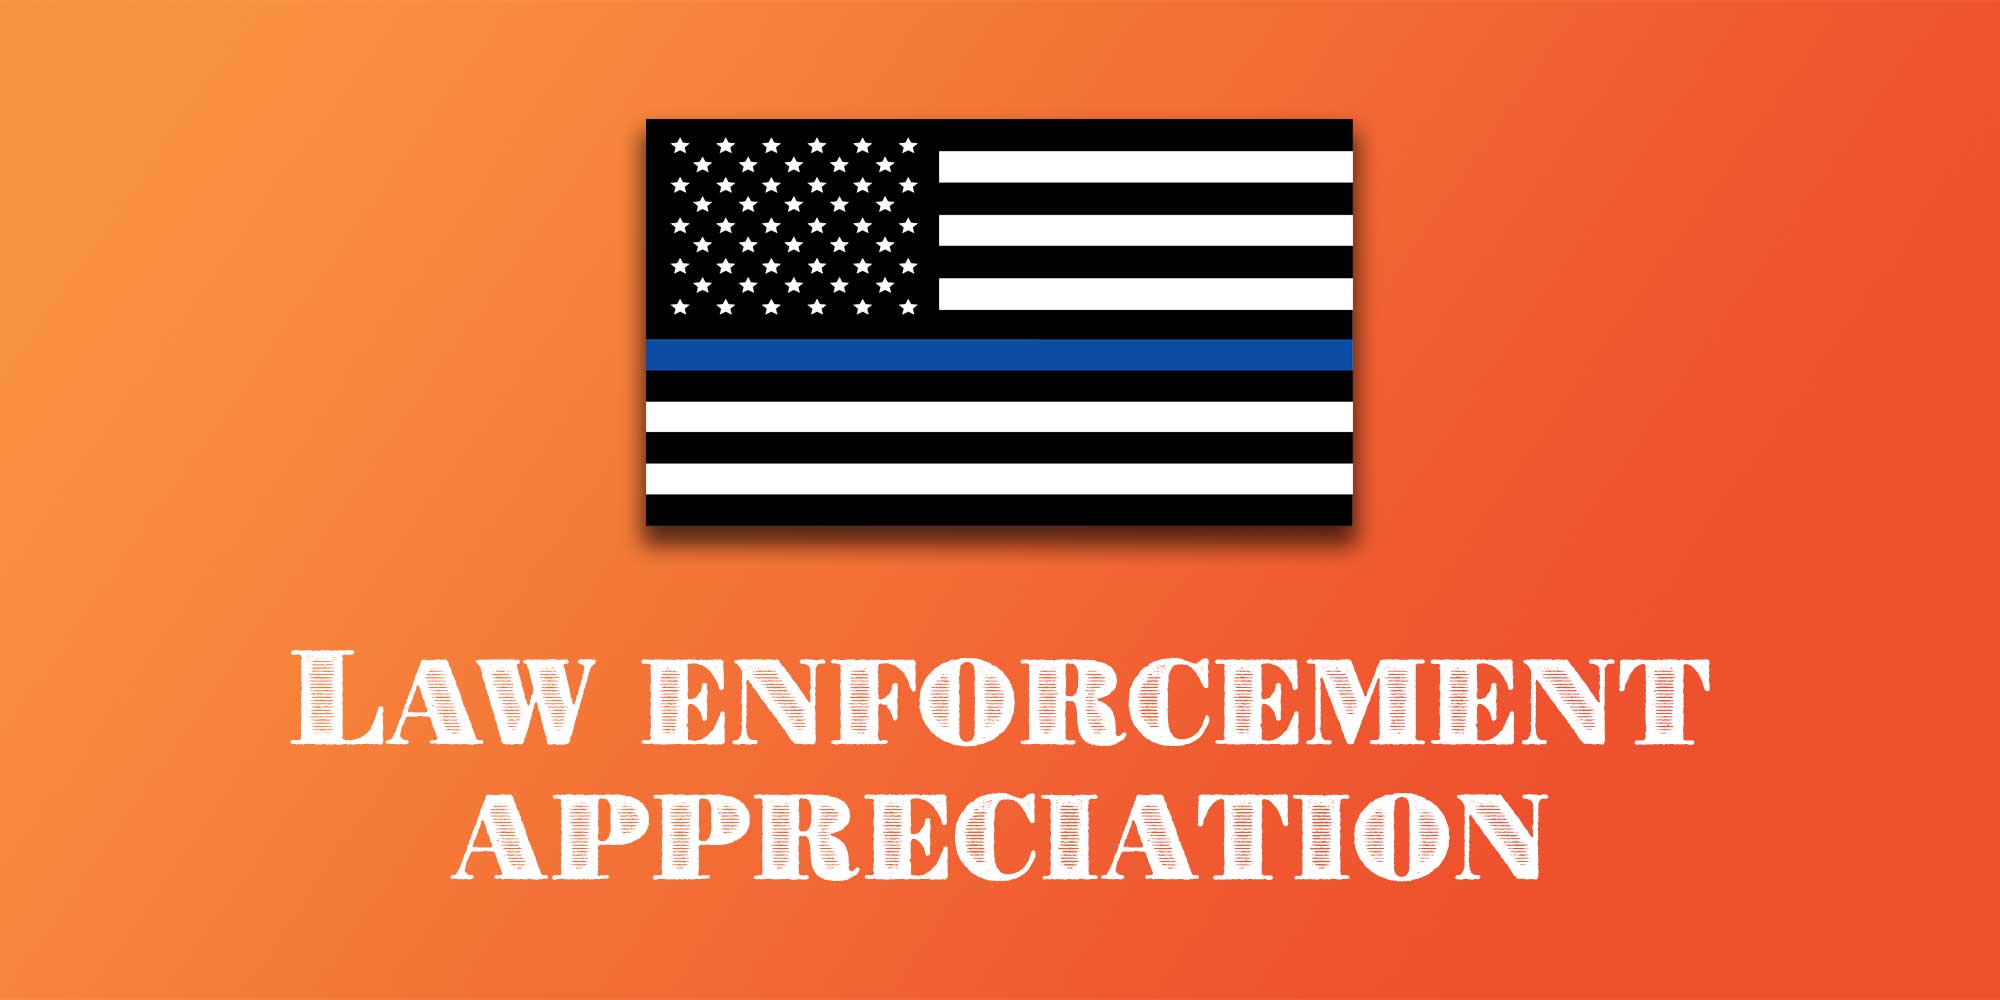 Law Enforcement Appreciation